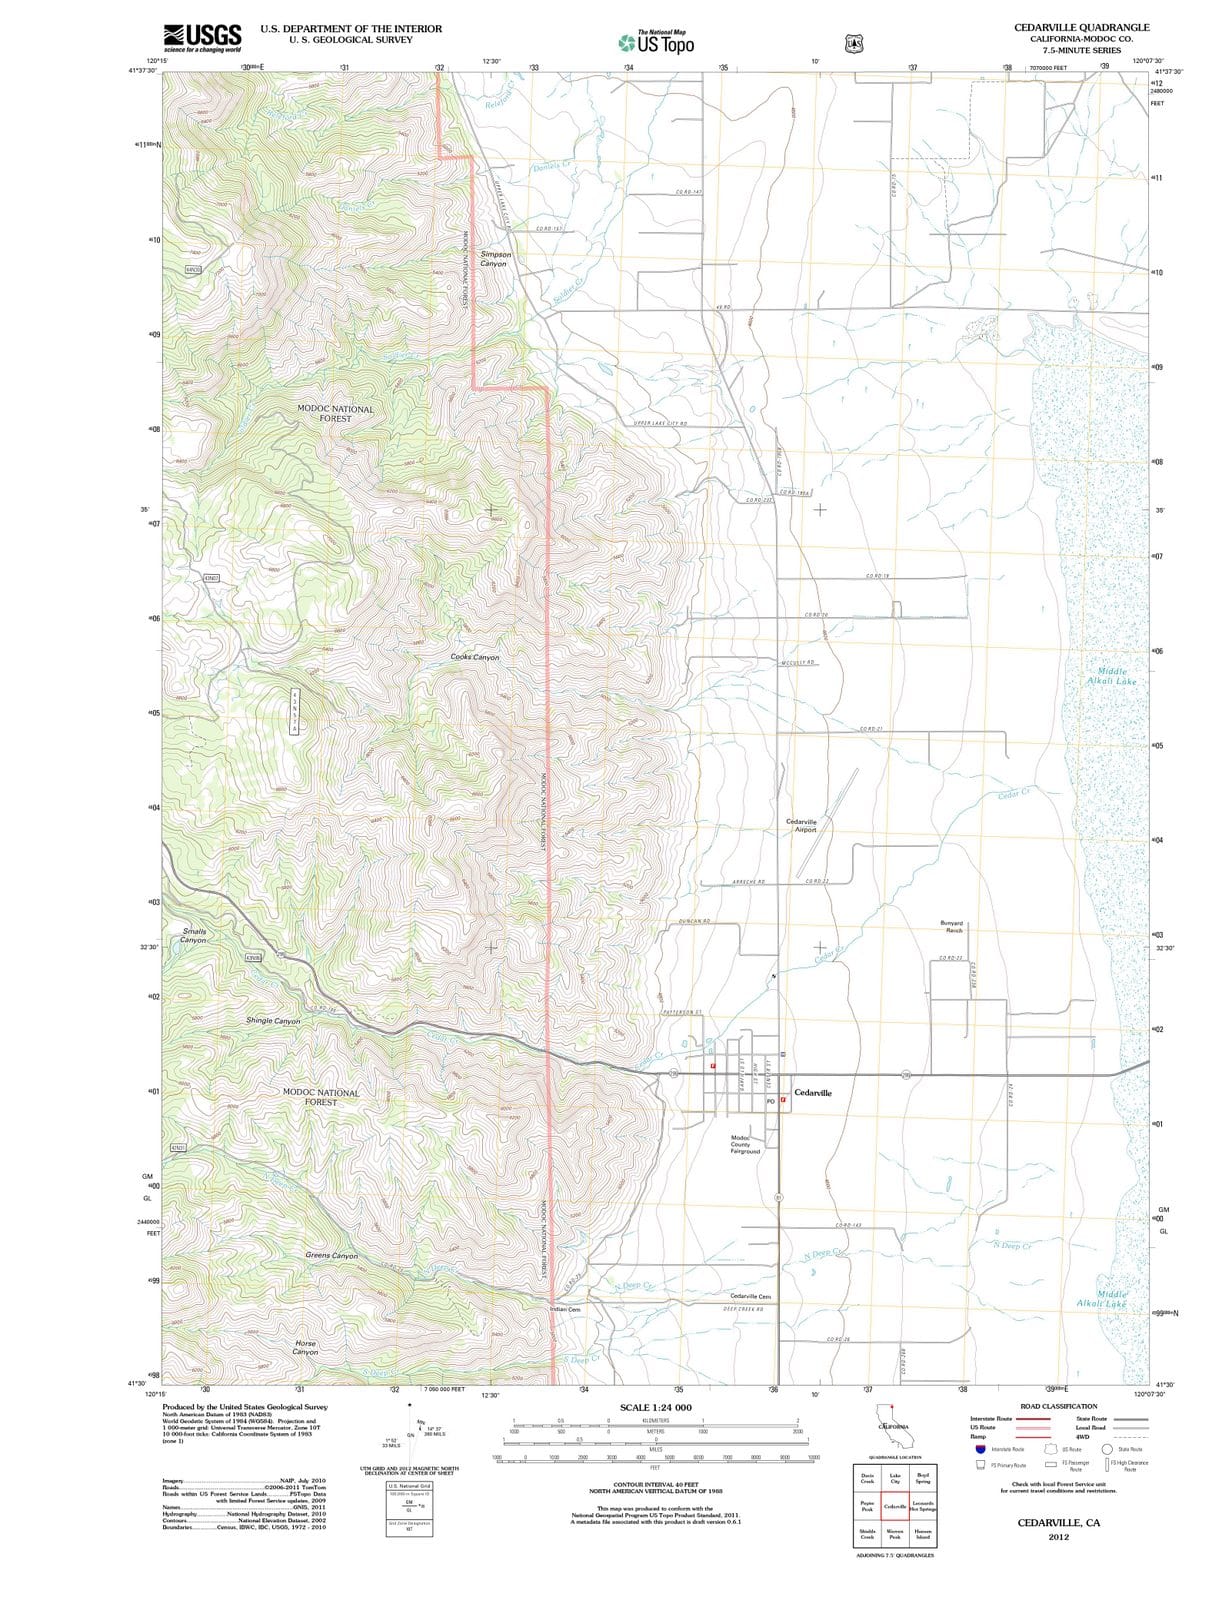 2012 Cedarville, CA - California - USGS Topographic Map